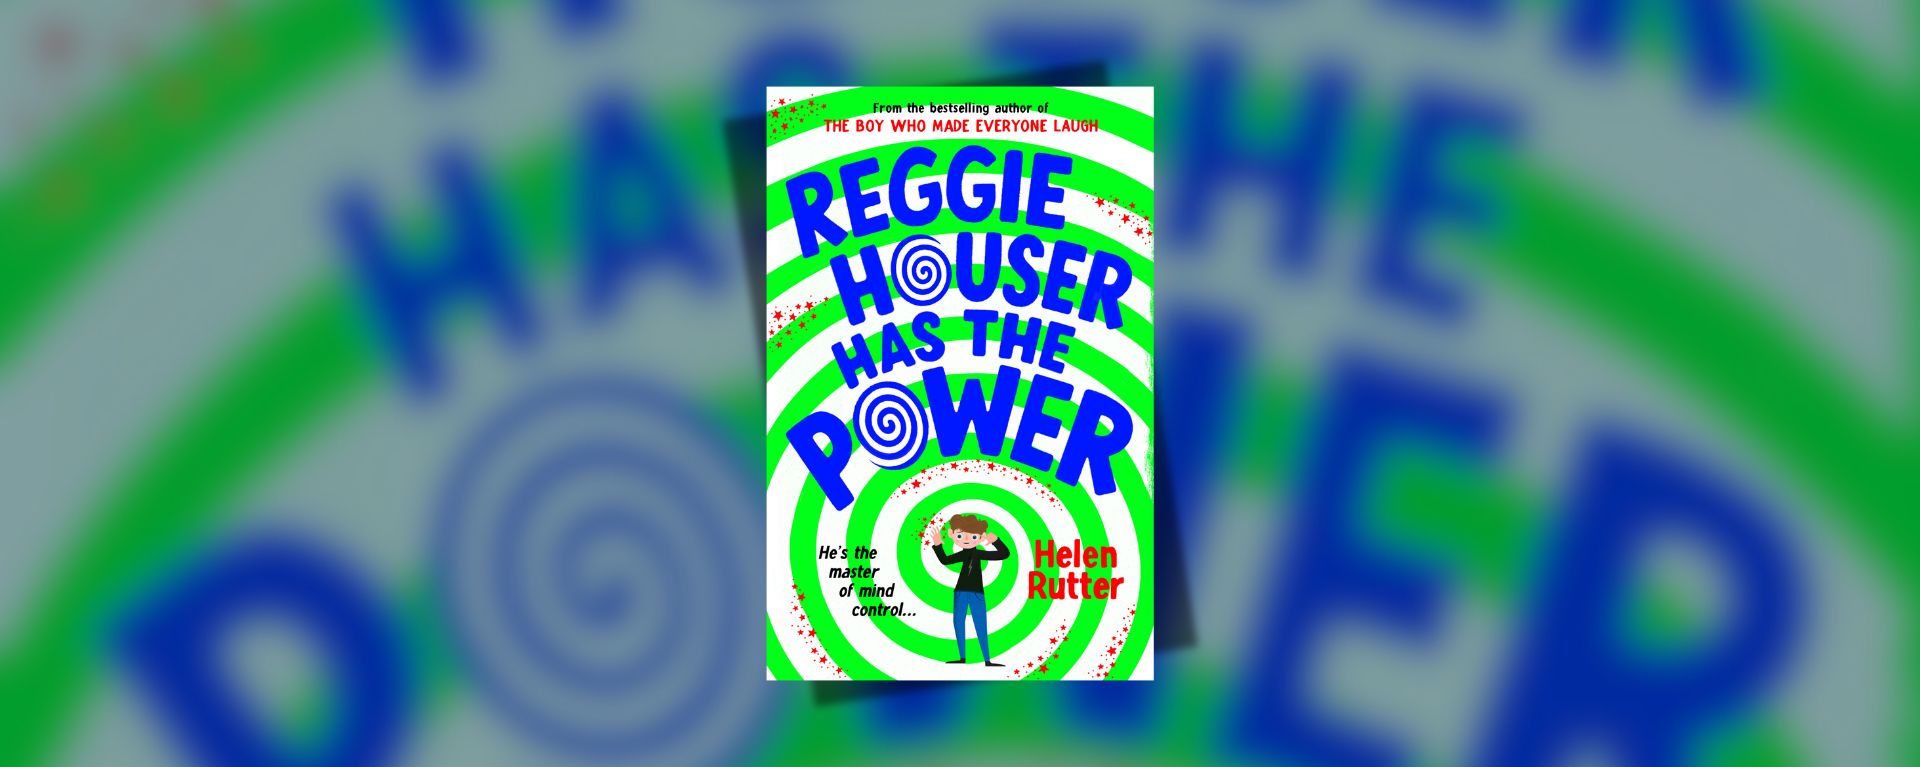 Reggie Houser has the power - Helen Rutter